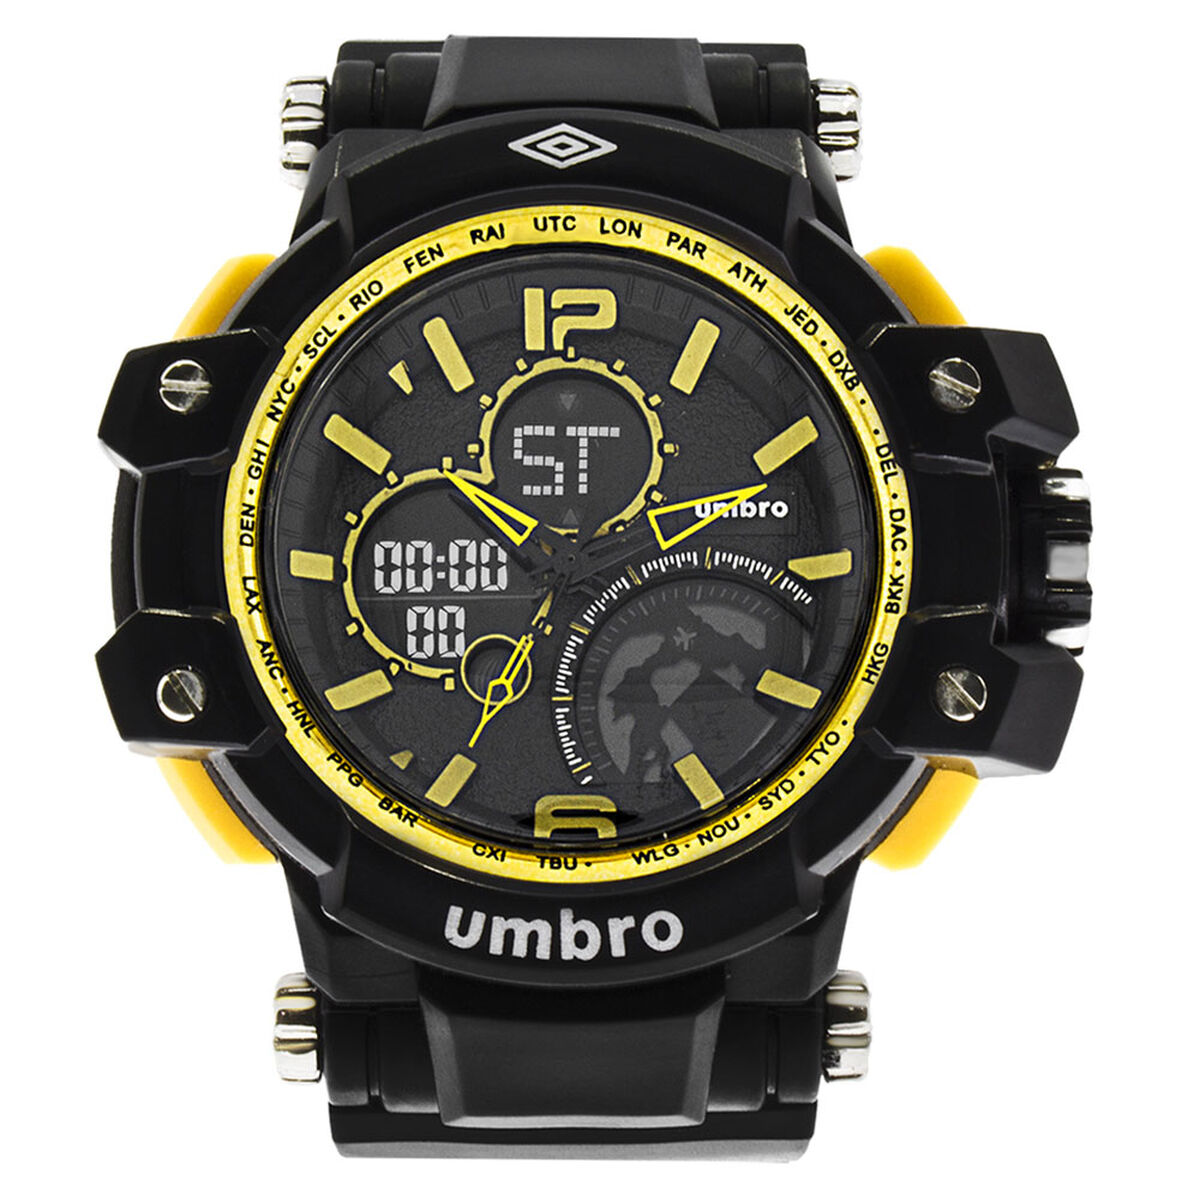 Reloj Digital UMBRO Modelo UMB-085-1